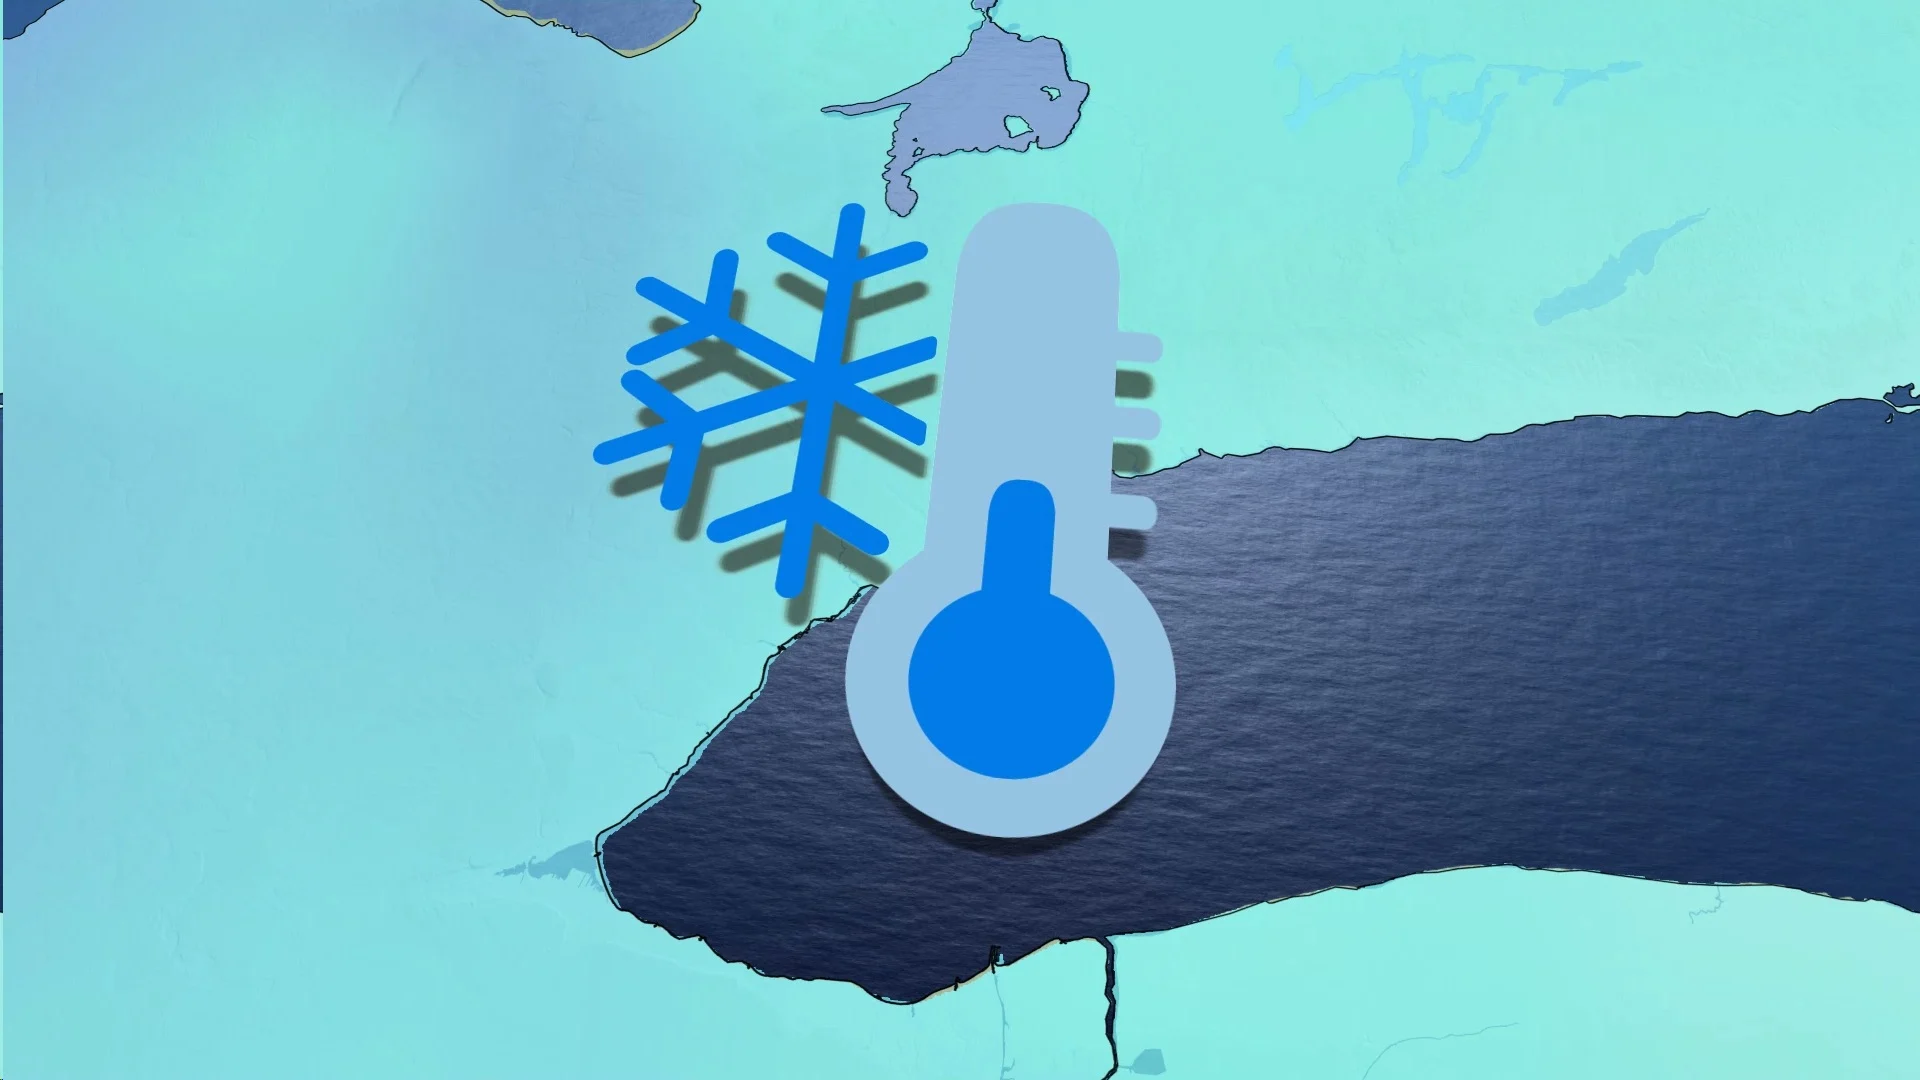 Streak ends: It took Toronto 259 days to fall below the freezing mark